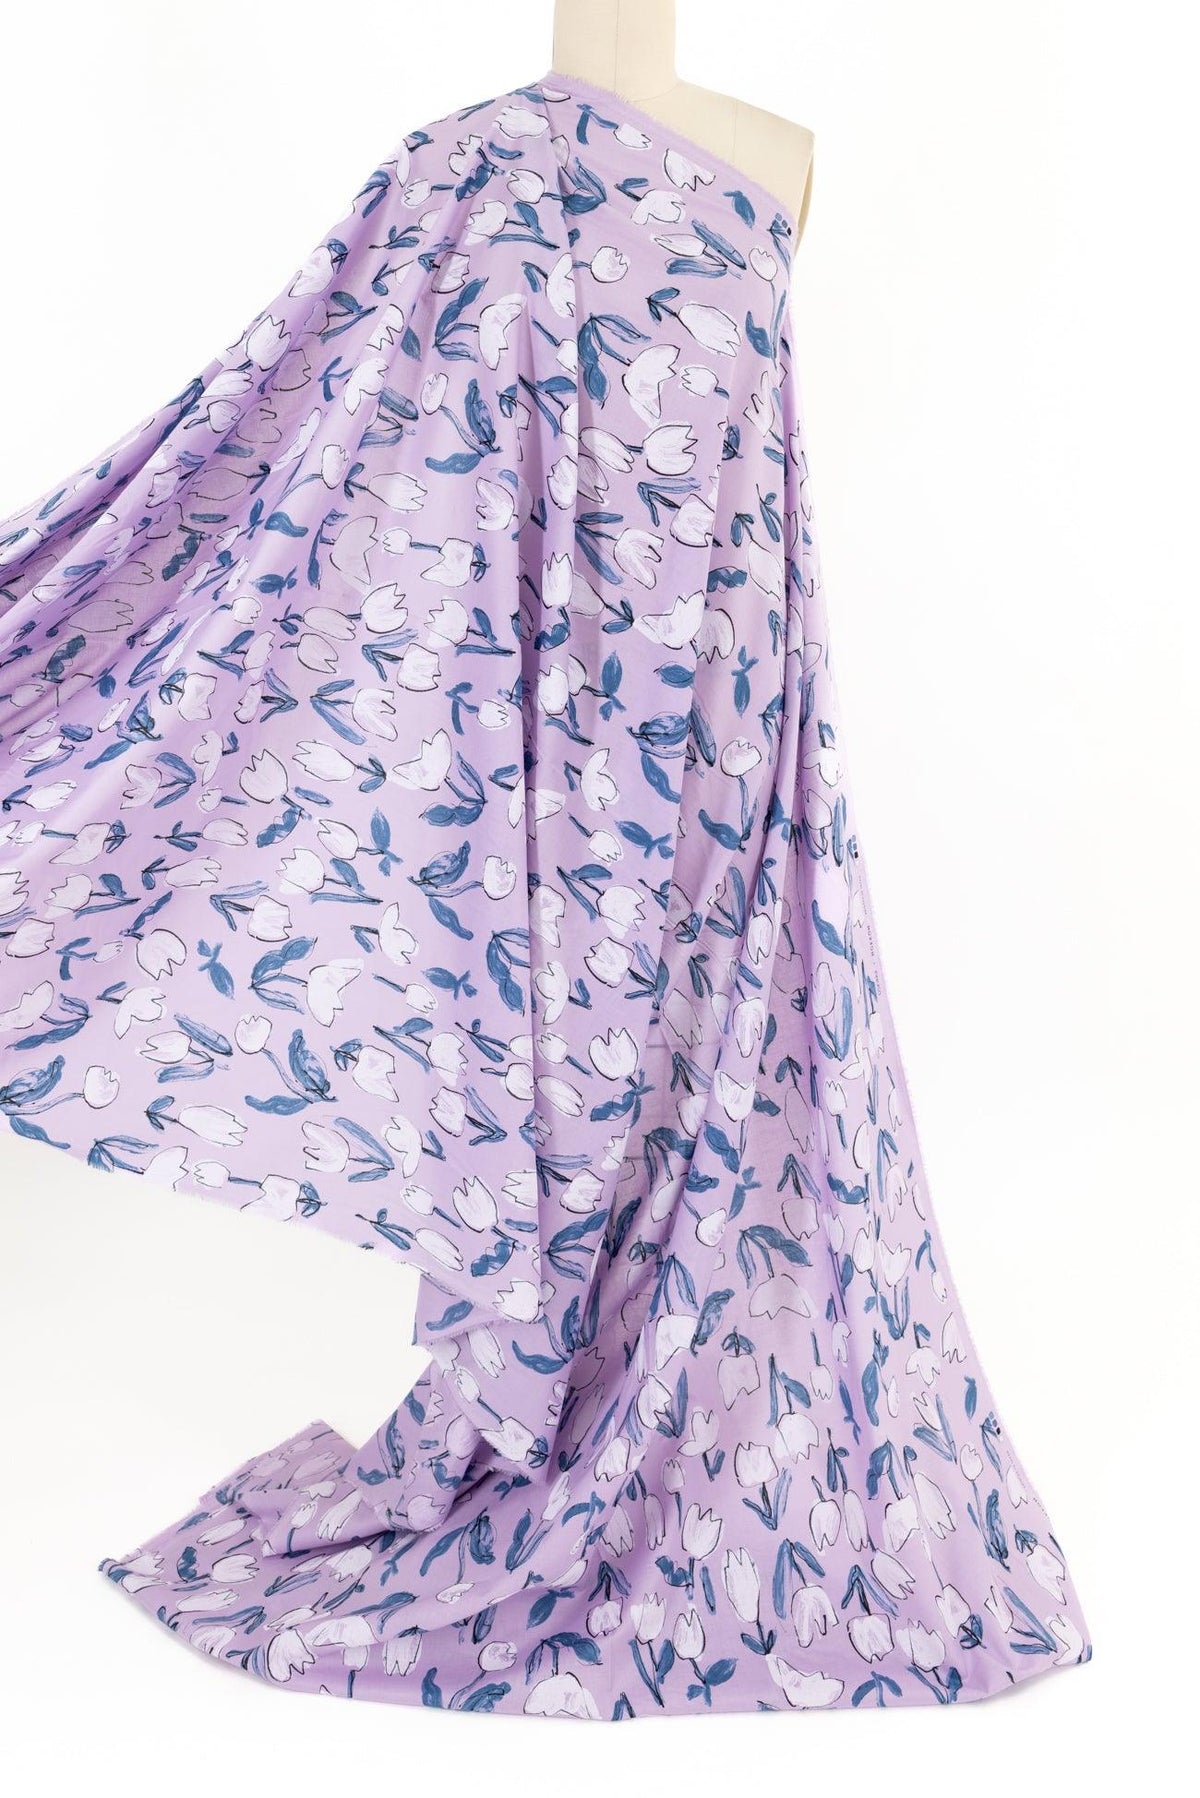 Lavender Tulips Japanese Cotton Woven - Marcy Tilton Fabrics